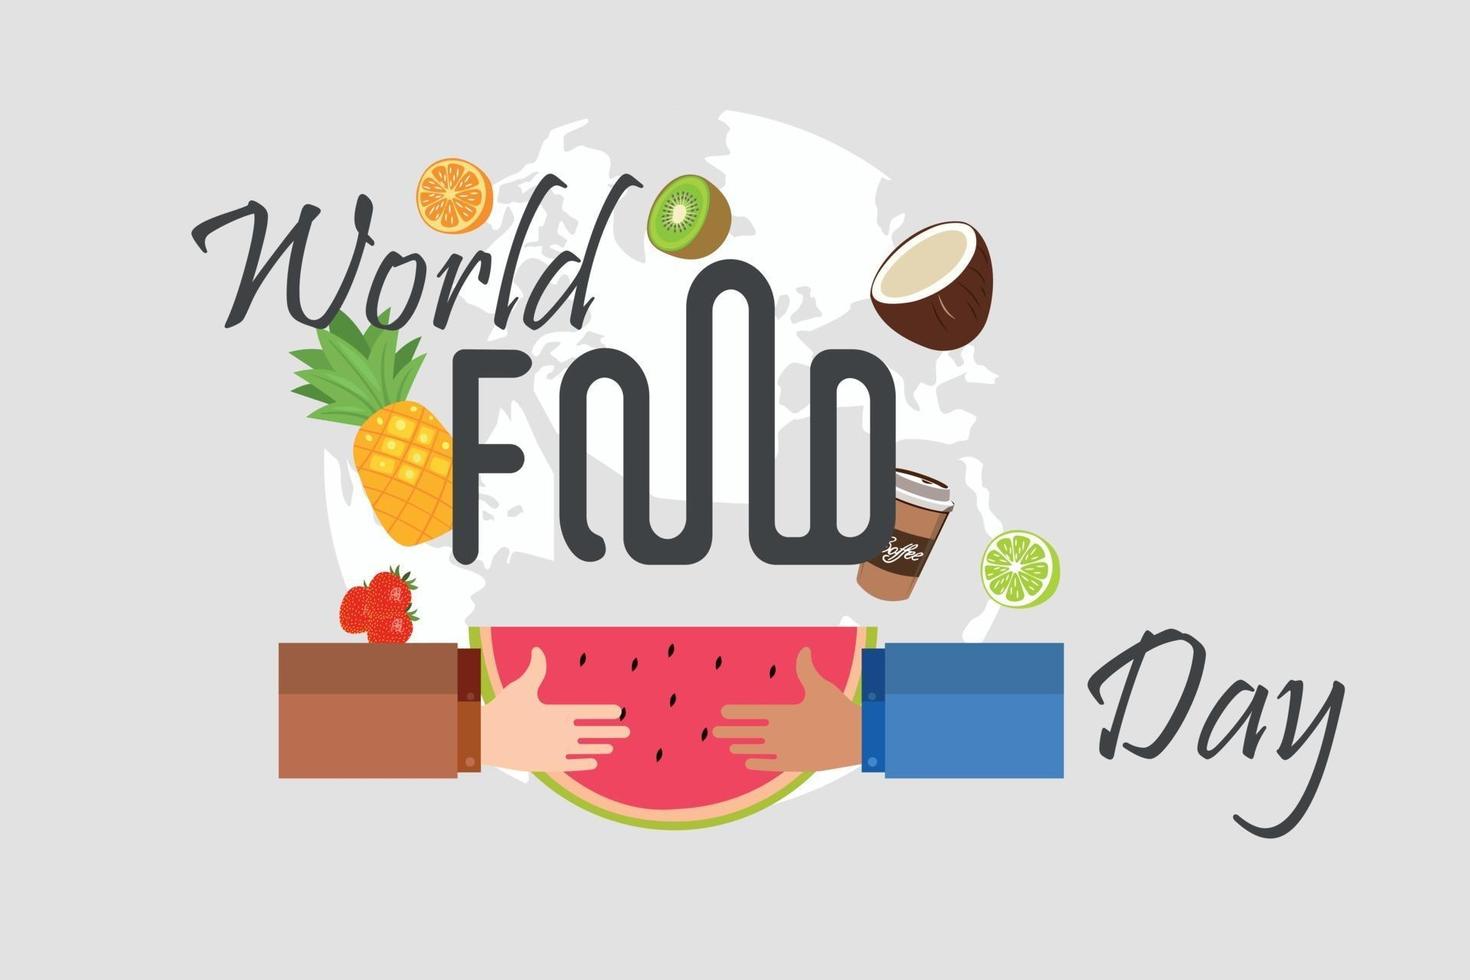 dia mundial de la comida vector